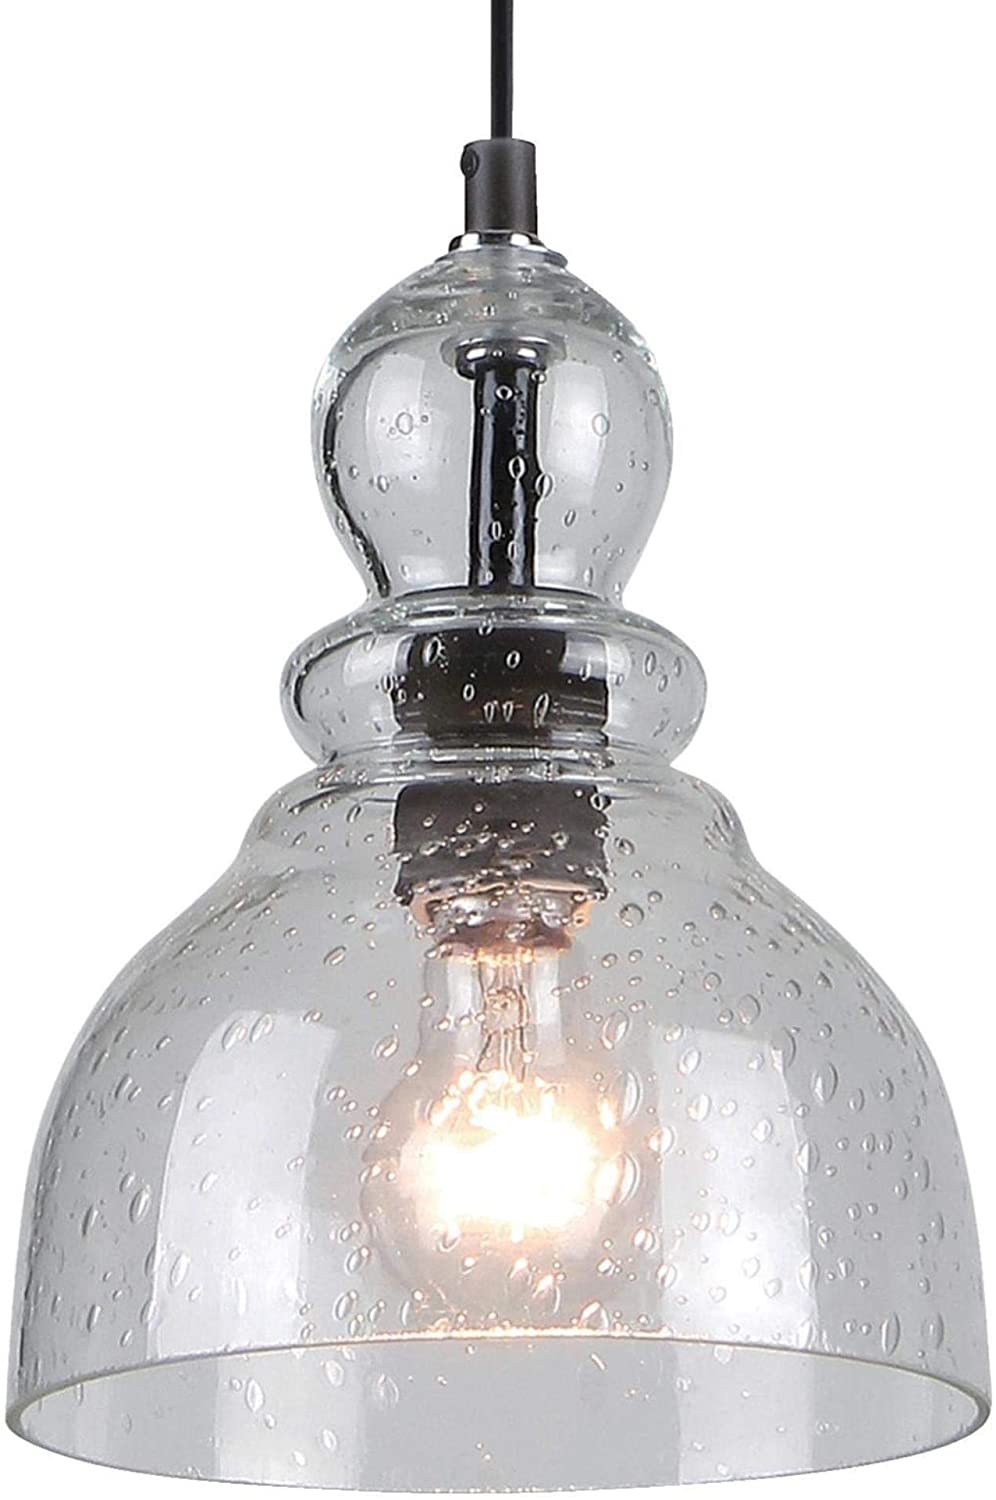 Indoor seeded glass industrial pendant lamp light black color